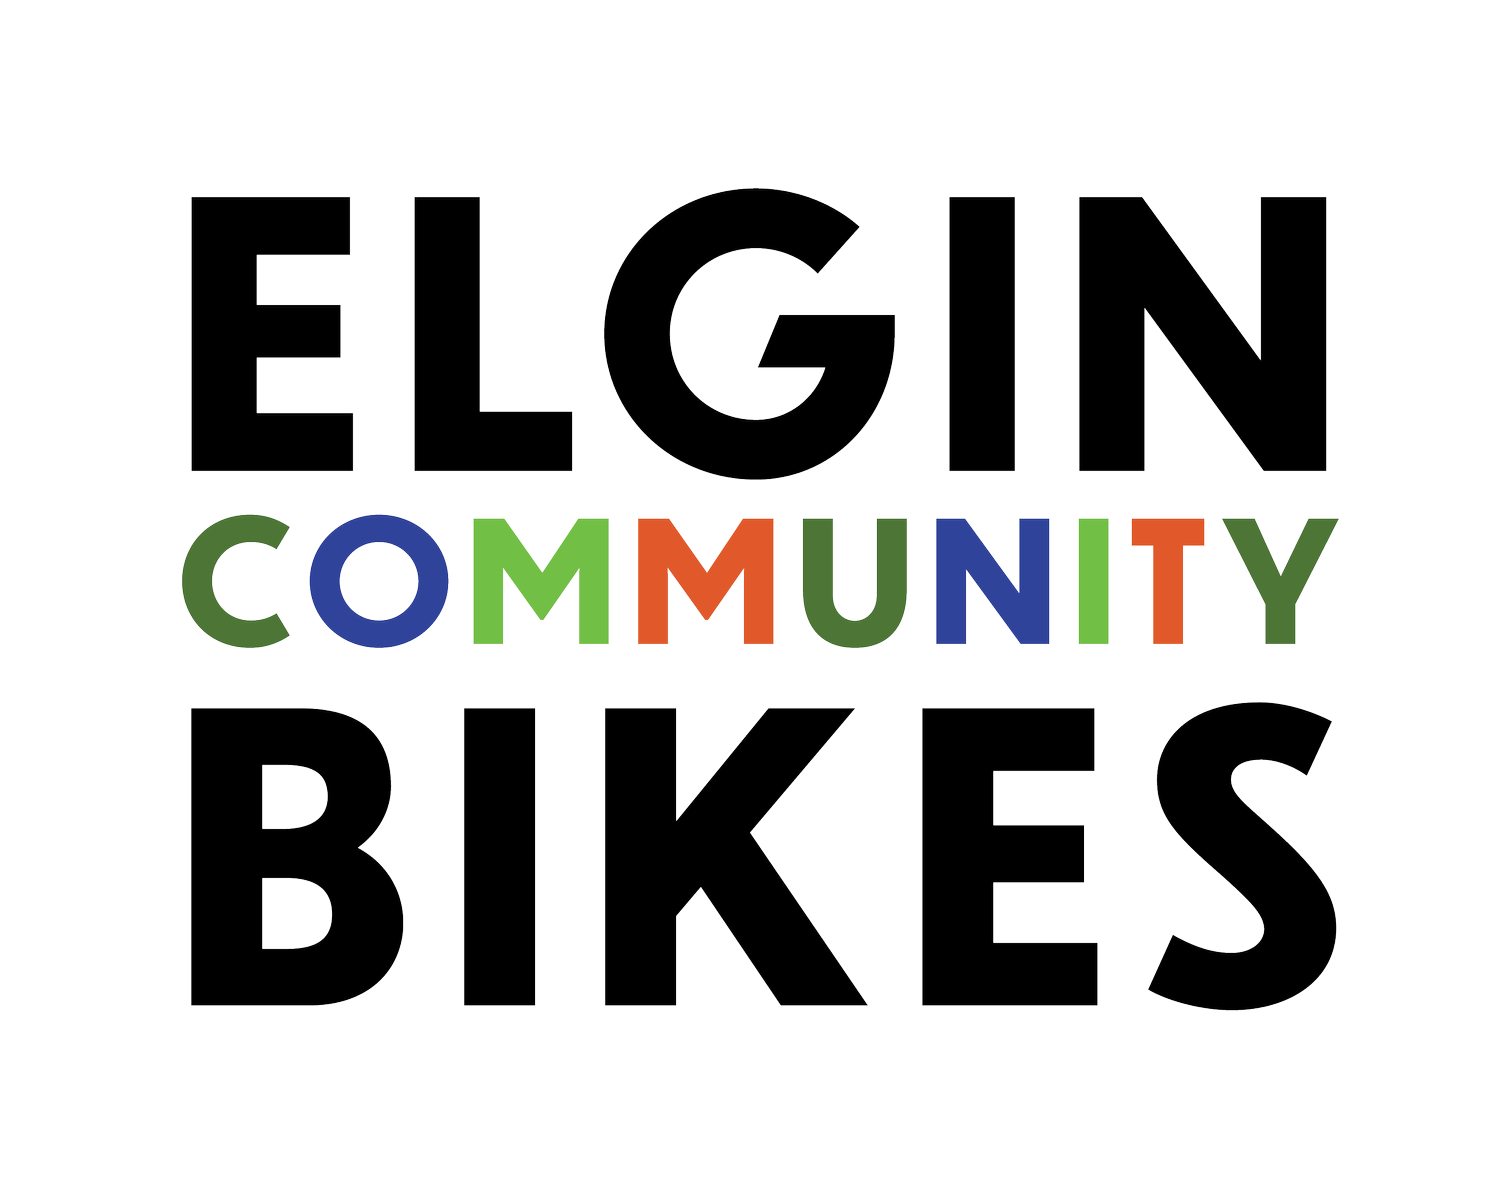 Elgin Community Bikes